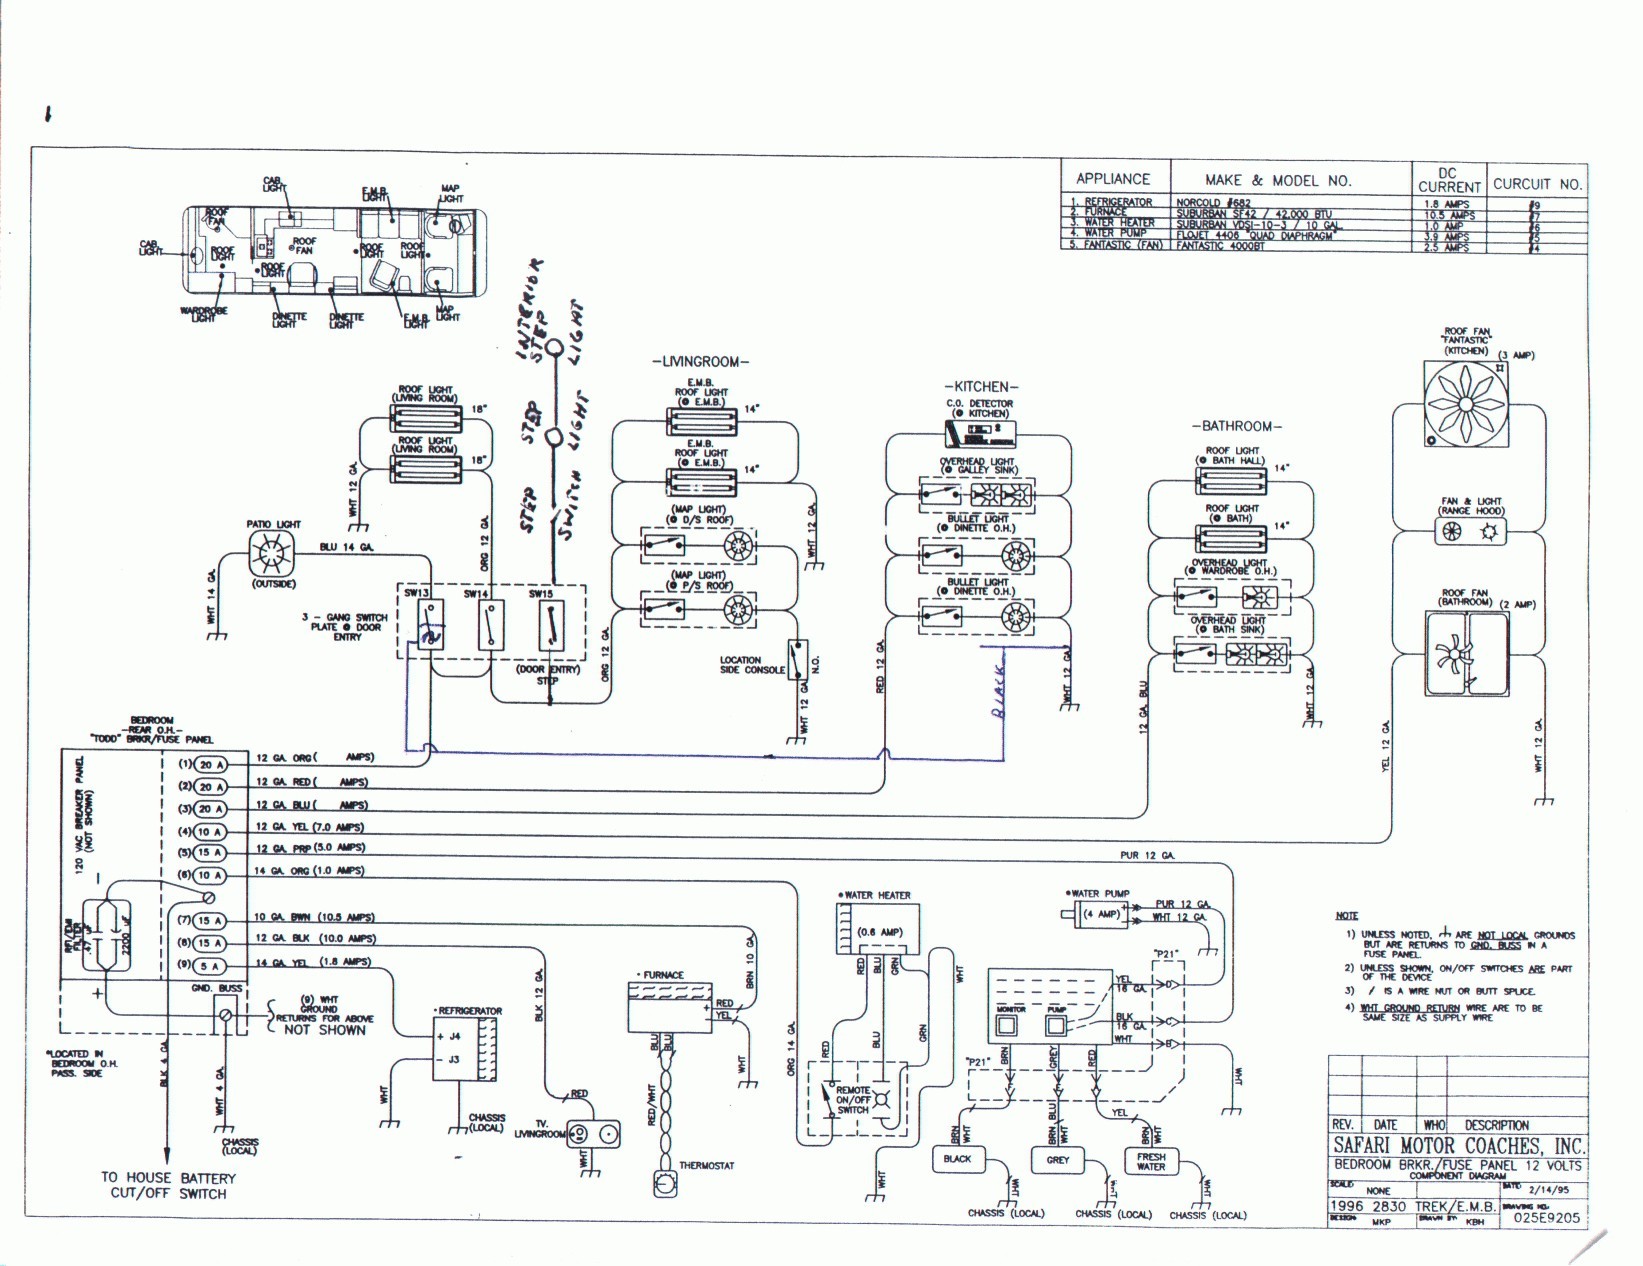 Breaker Panel Wiring Diagram Efcaviation lineedmeds03